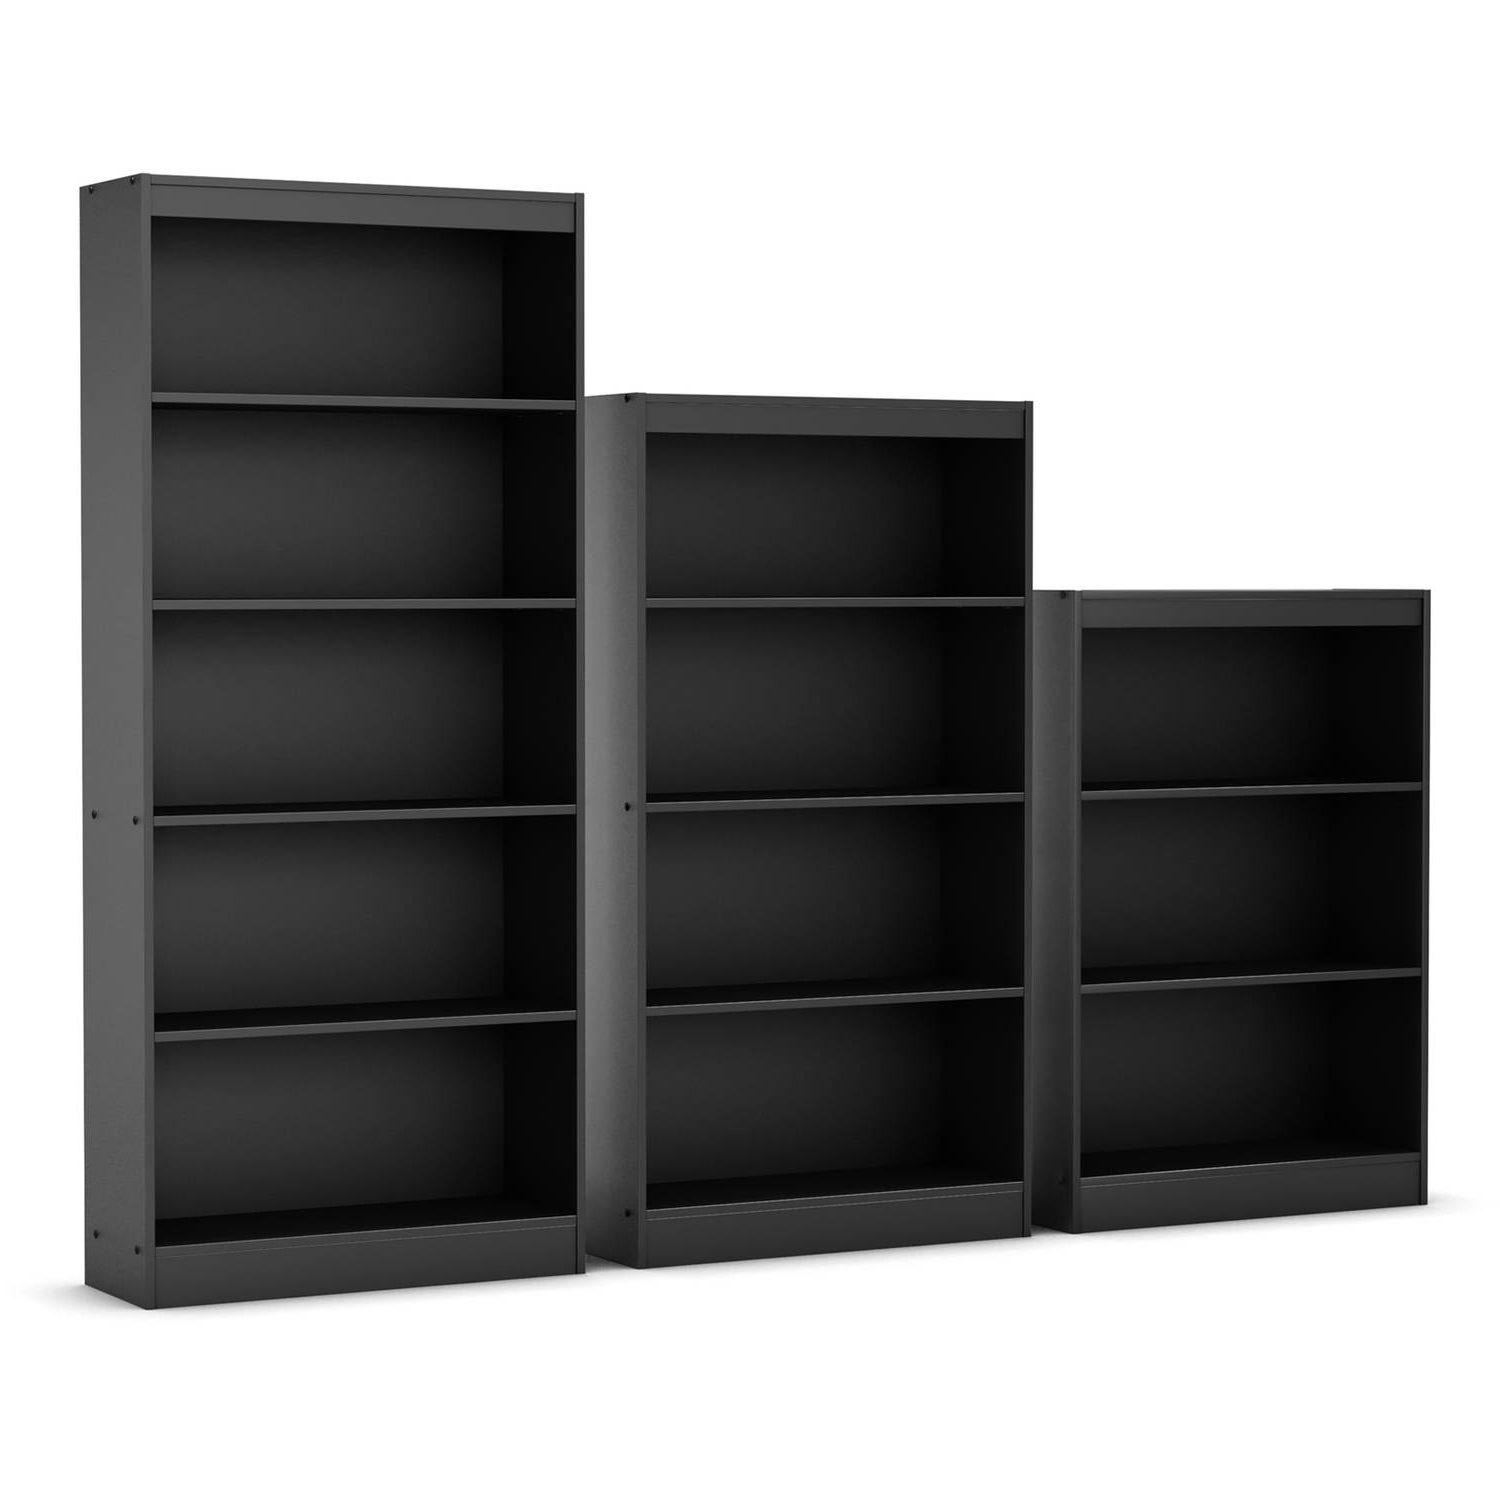 4 Shelf Bookcases Pertaining To Favorite South Shore Smart Basics 4 Shelf 56" Bookcase, Multiple Finishes (View 11 of 15)